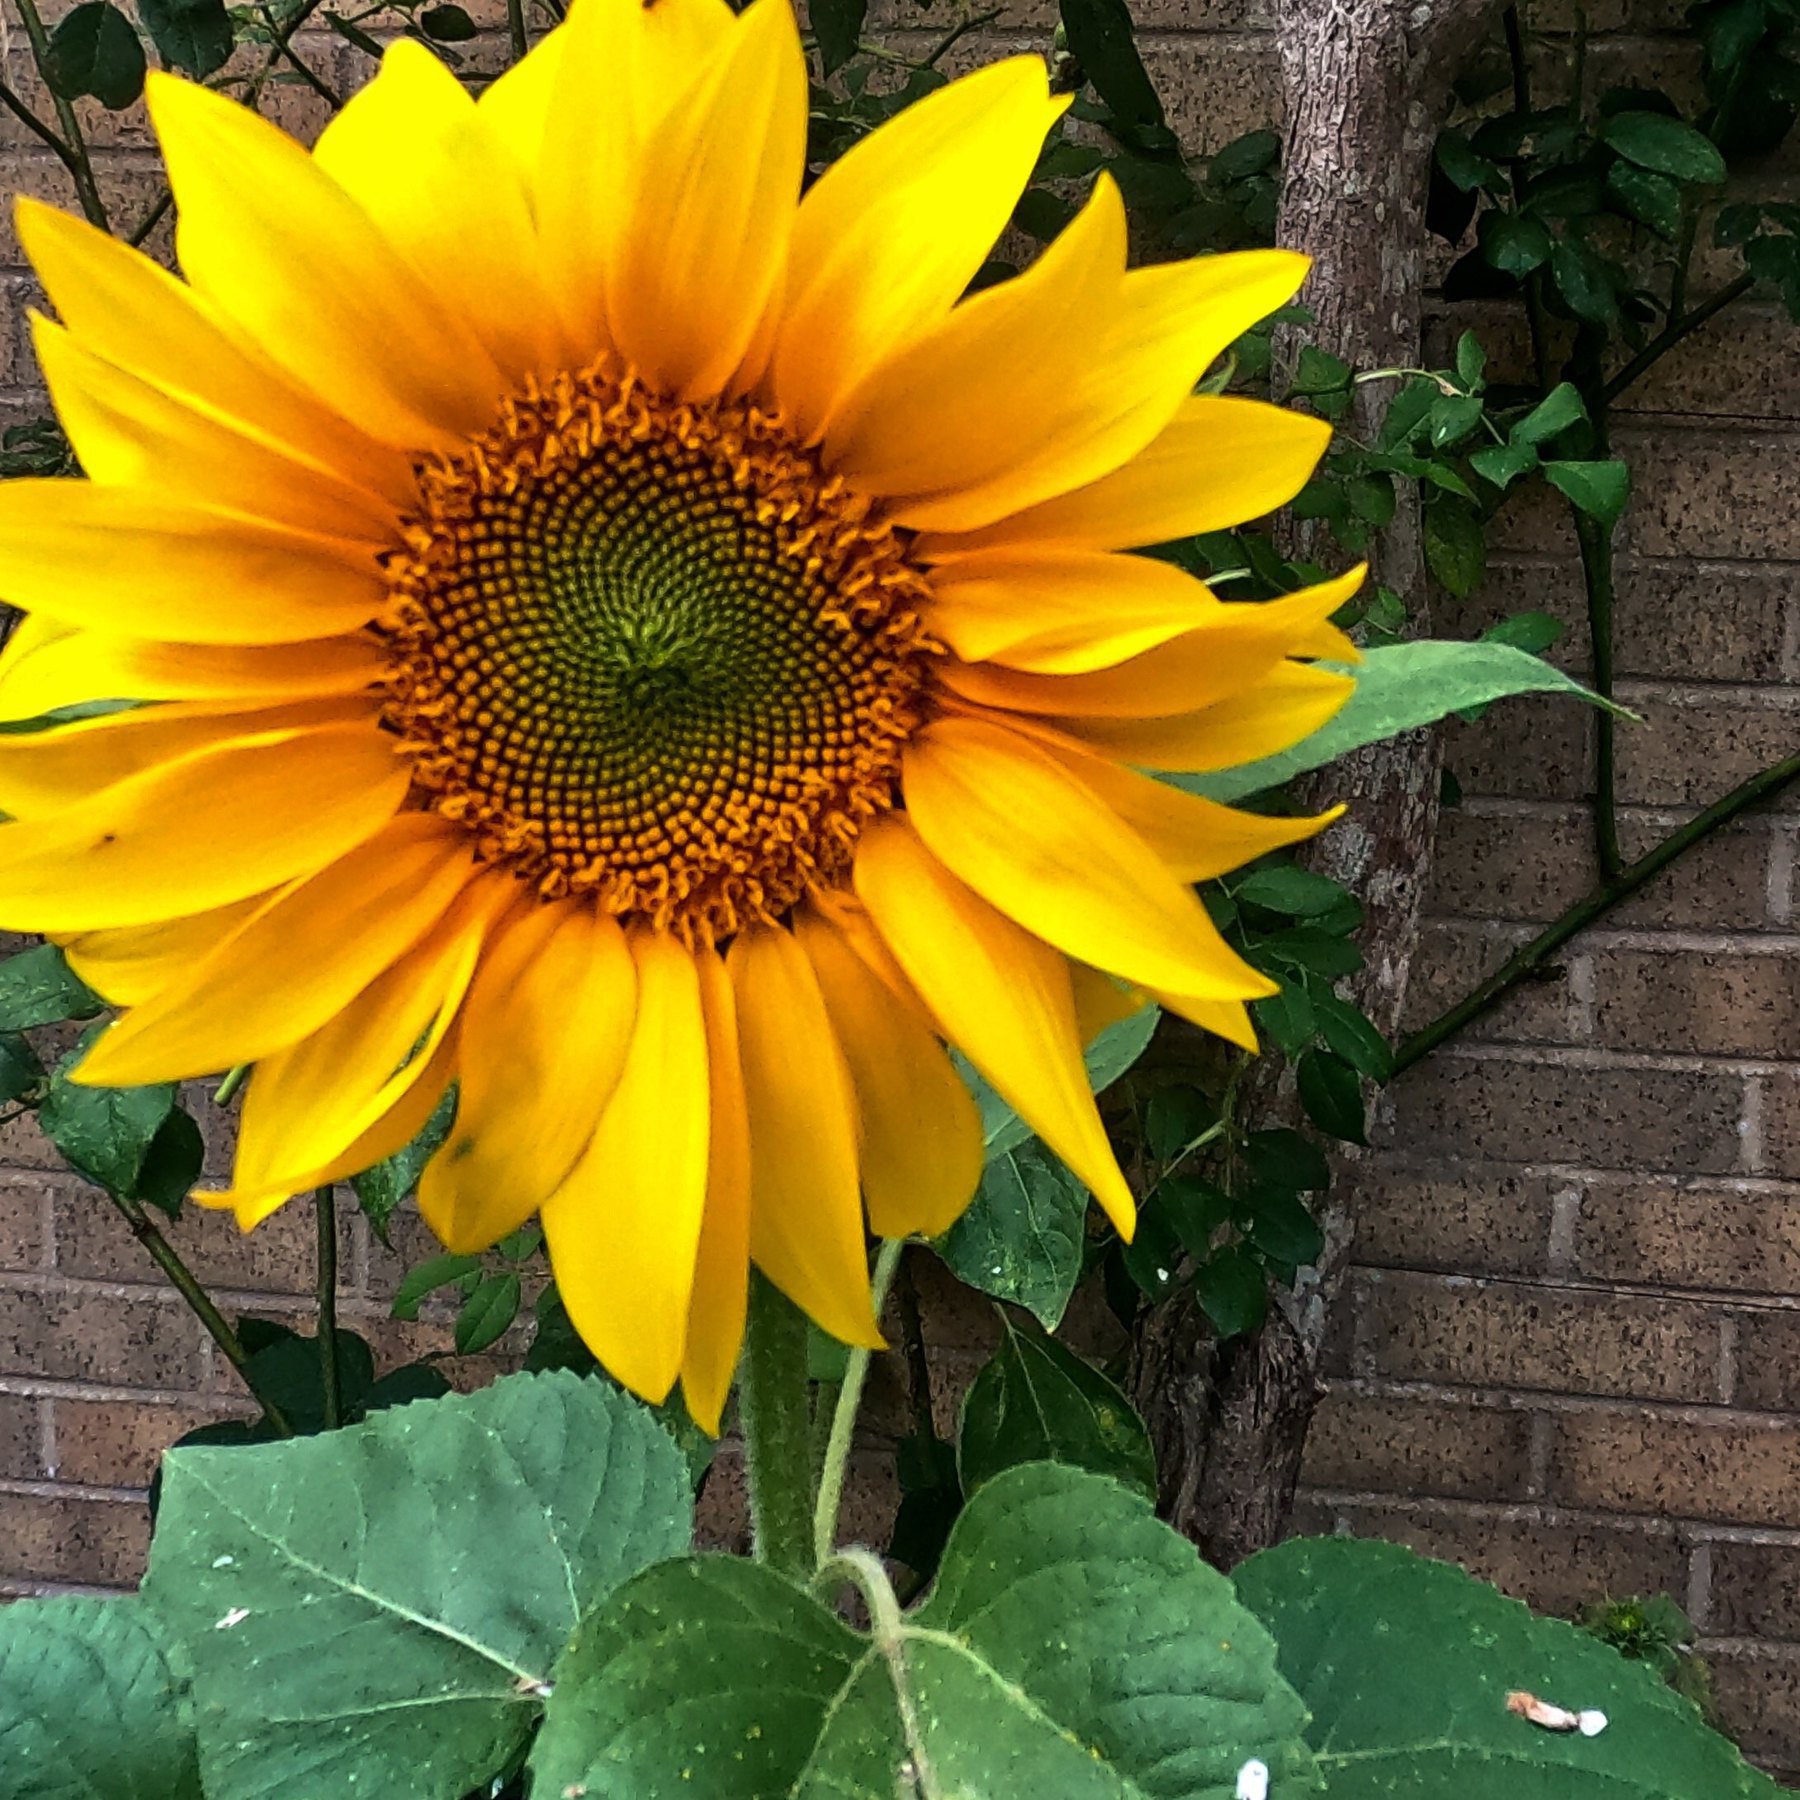 A sunflower in the back garden. 